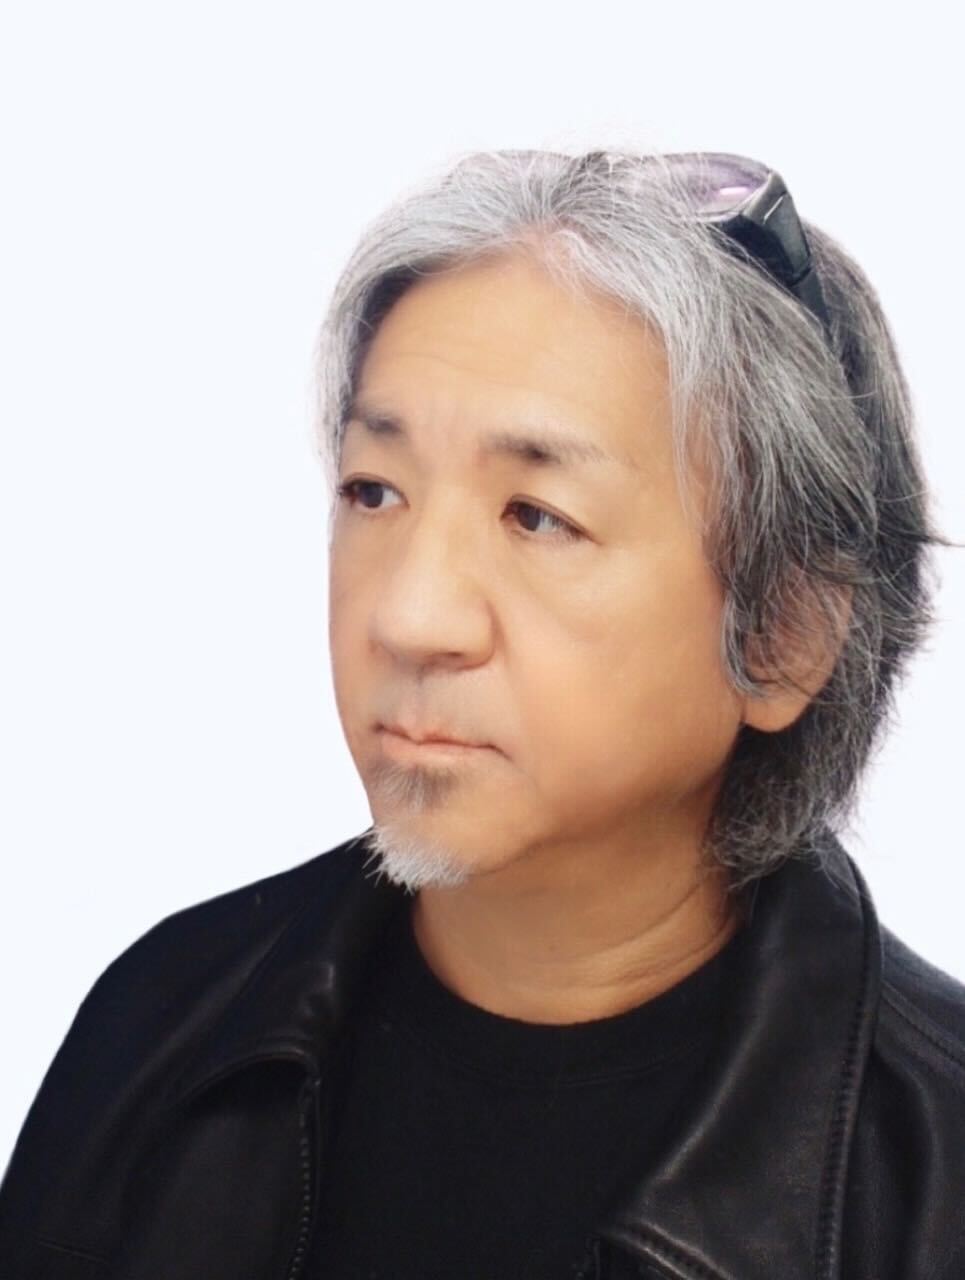 Producer and Art Director Junichi Murakami